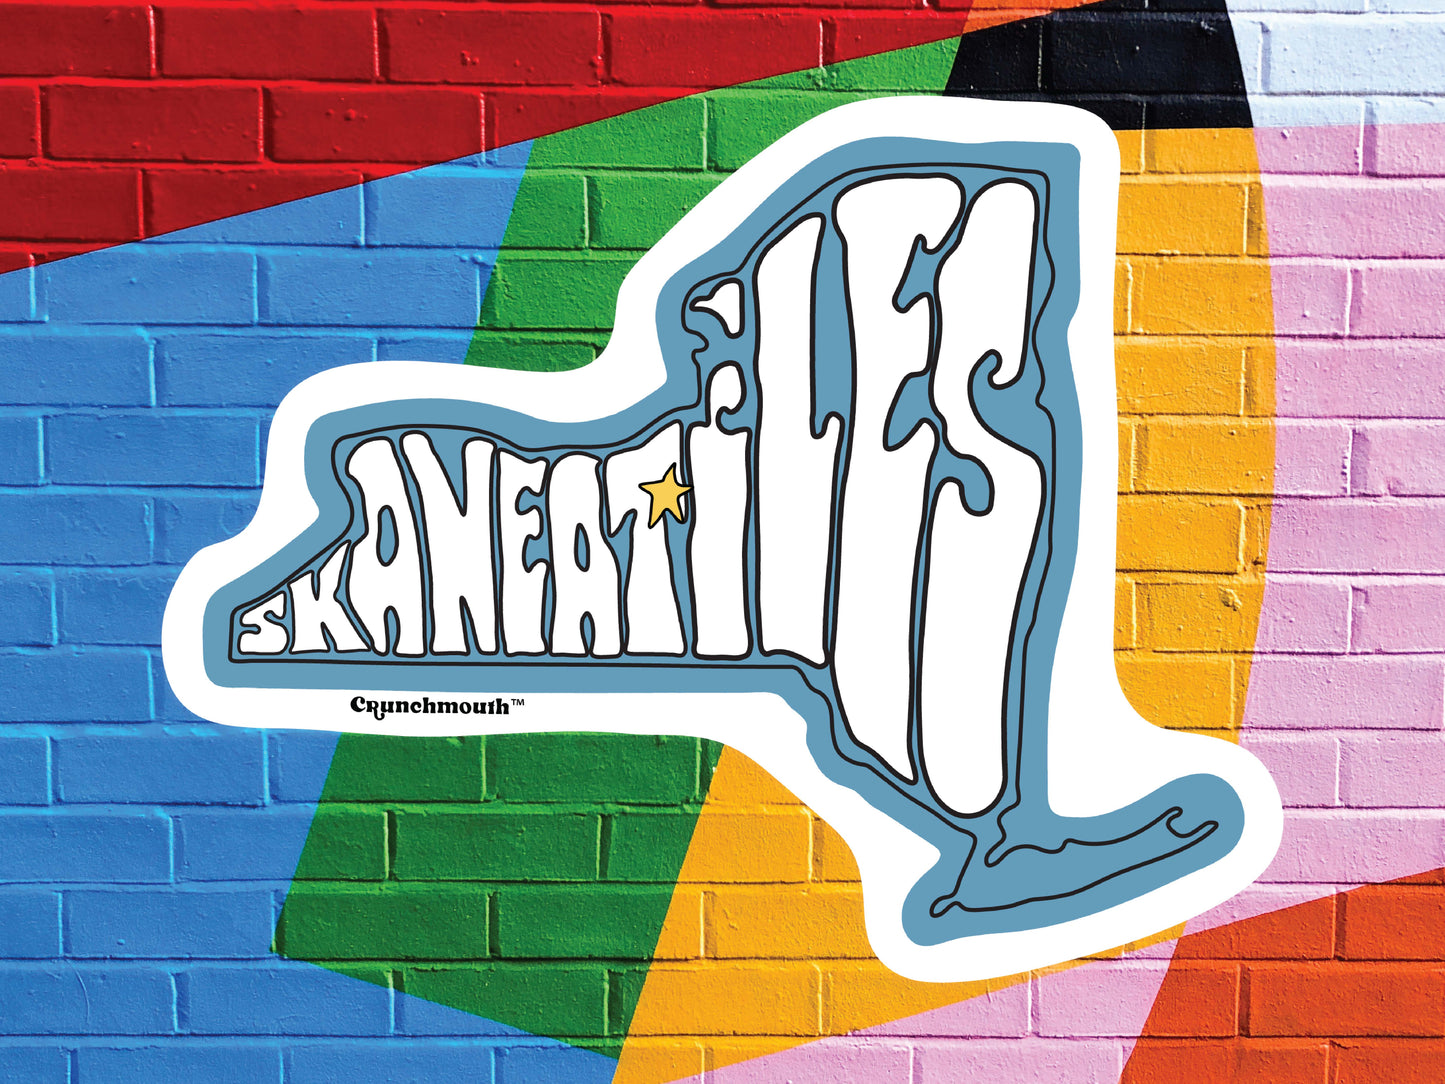 skaneateles laptop sticker, colorful brick wall background